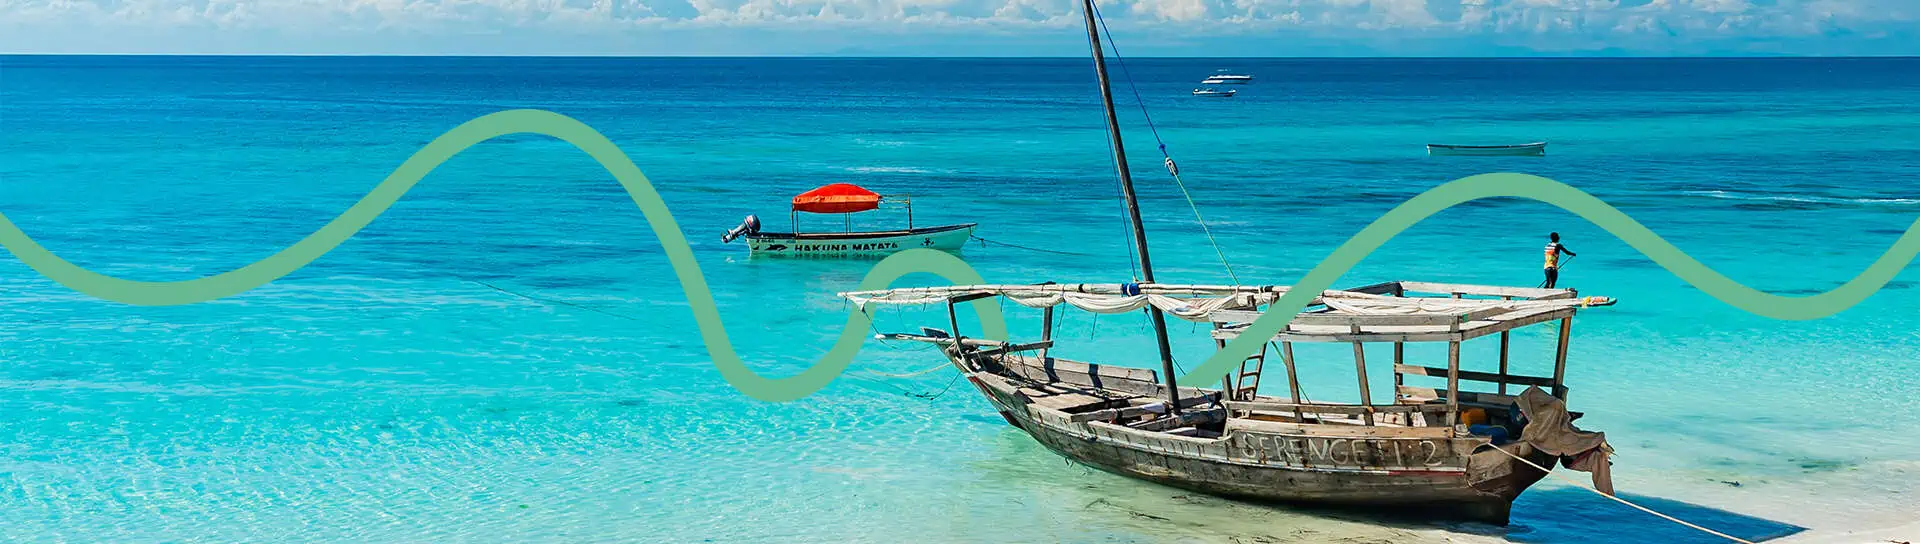 Loď na pláži v Zanzibaru